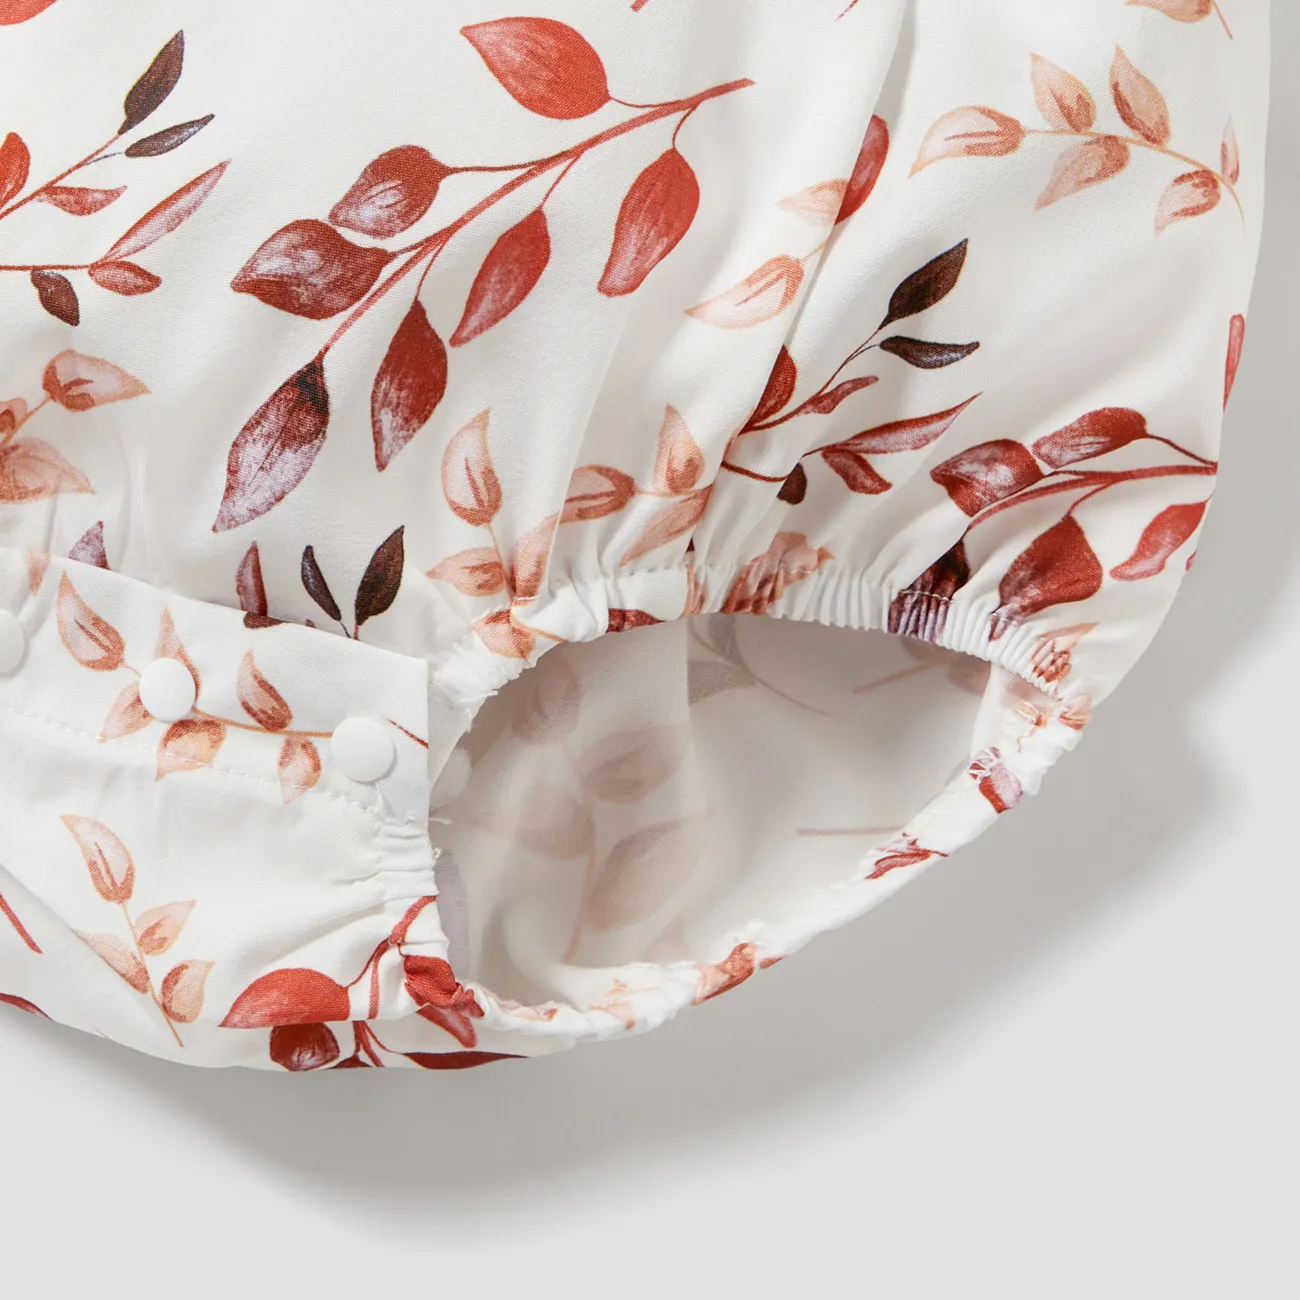 Baby Girl Floral/Plaid Print Sleeveless Ruffle Romper Brown&White big image 1